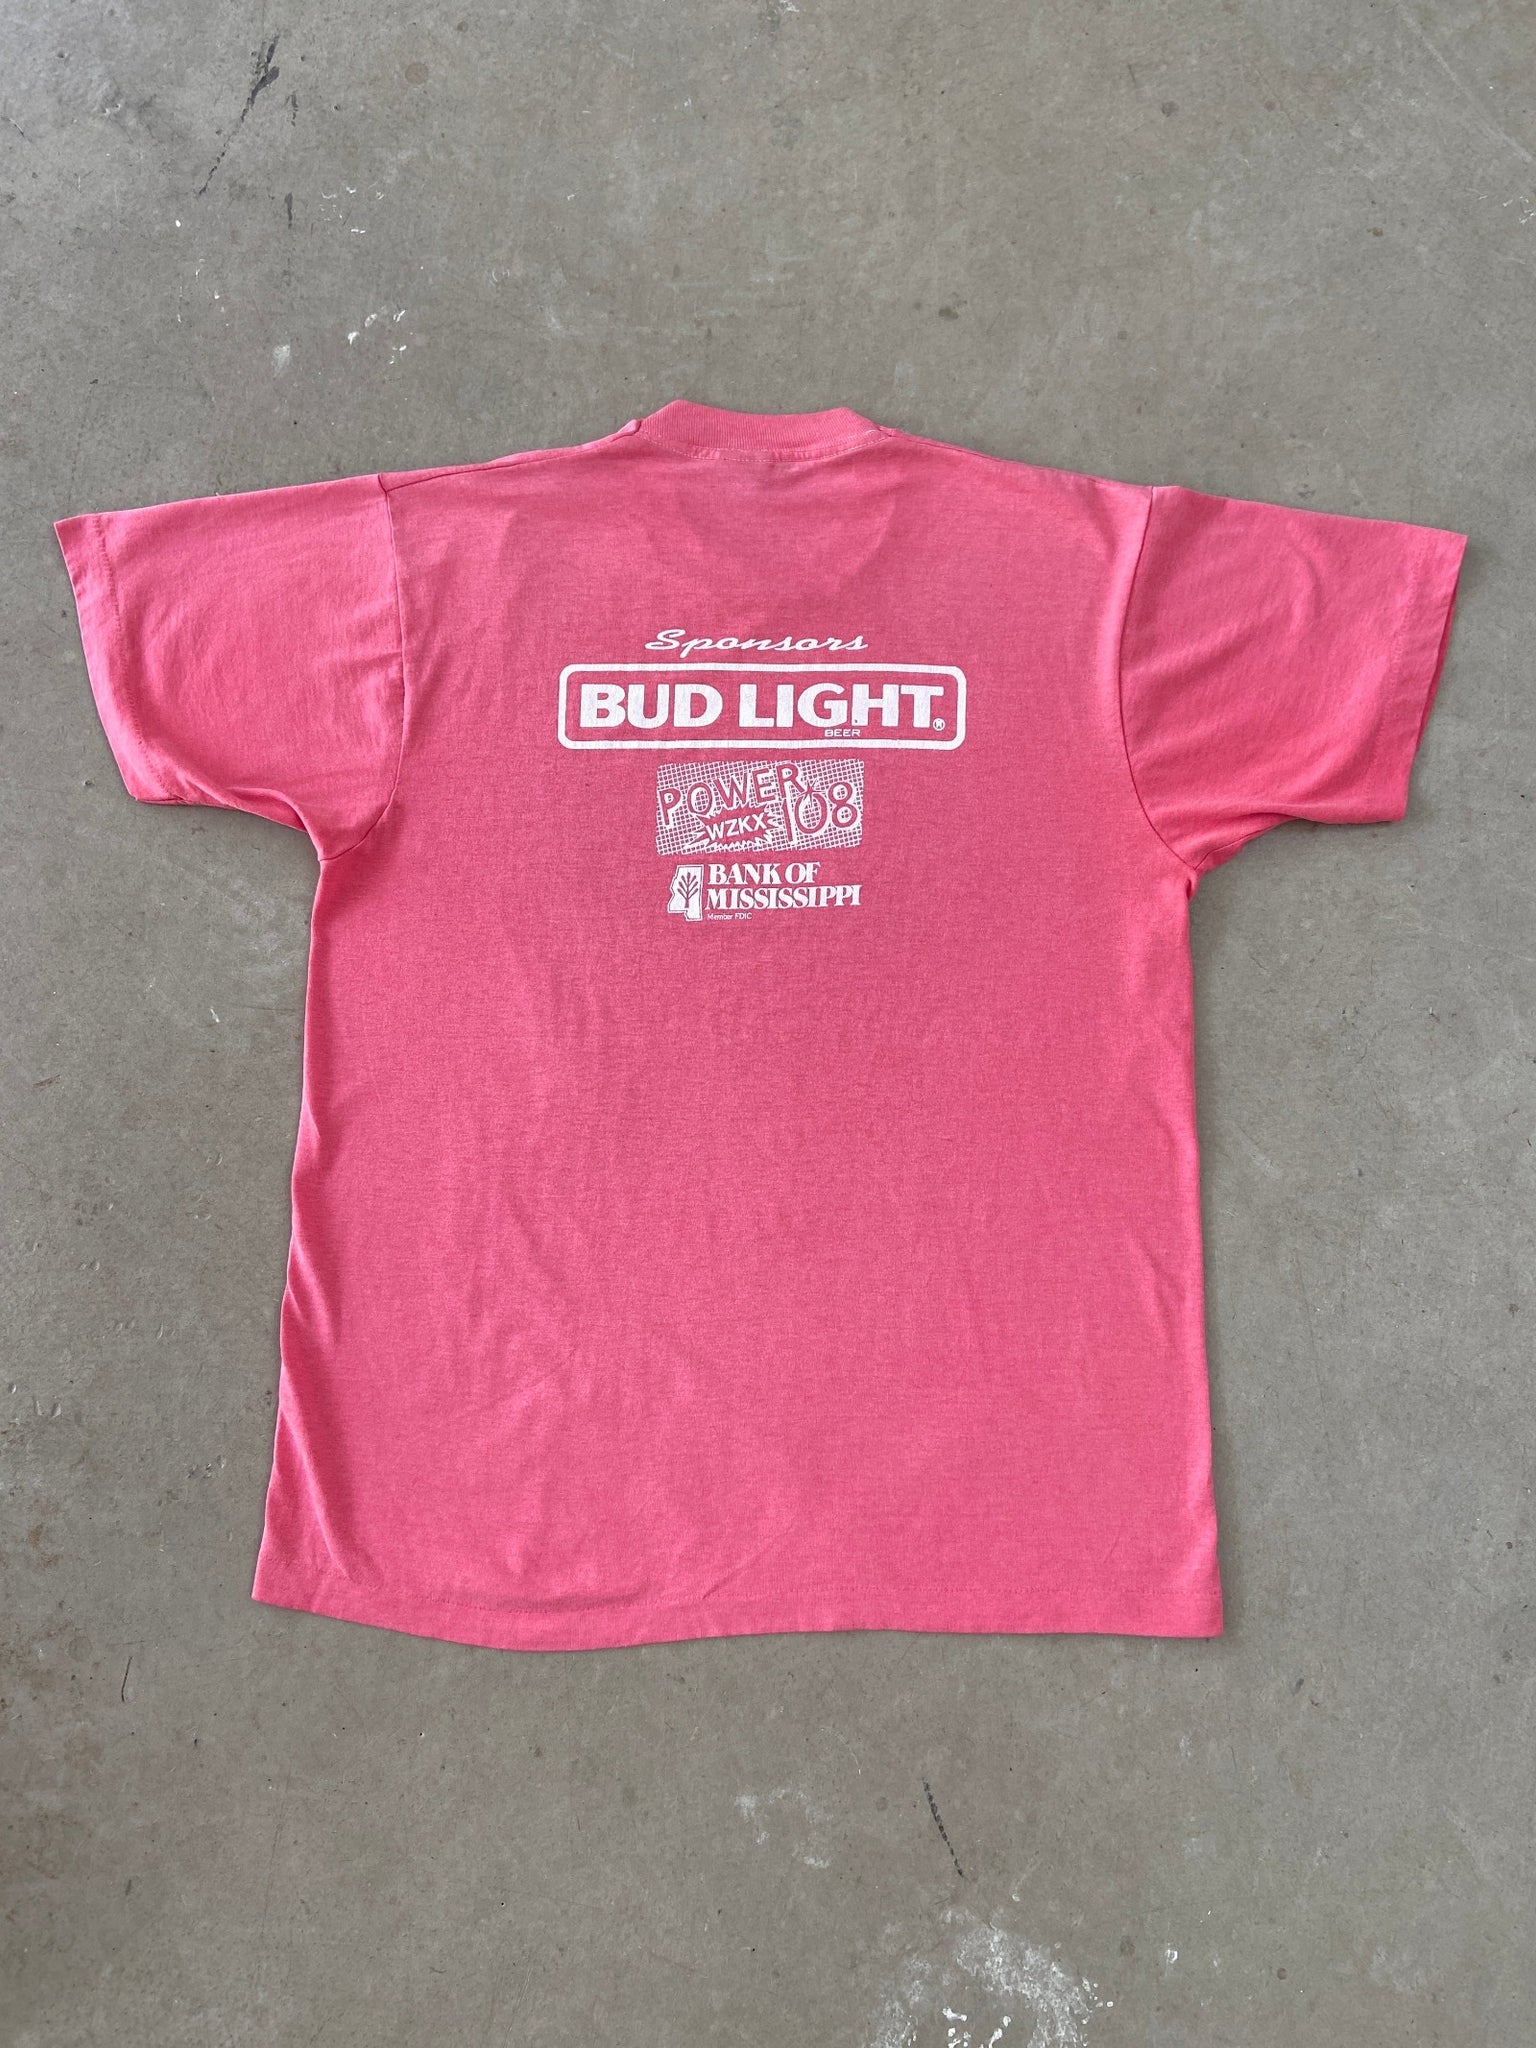 1989 Gulf Coast Classic Fun Run T-Shirt - XL